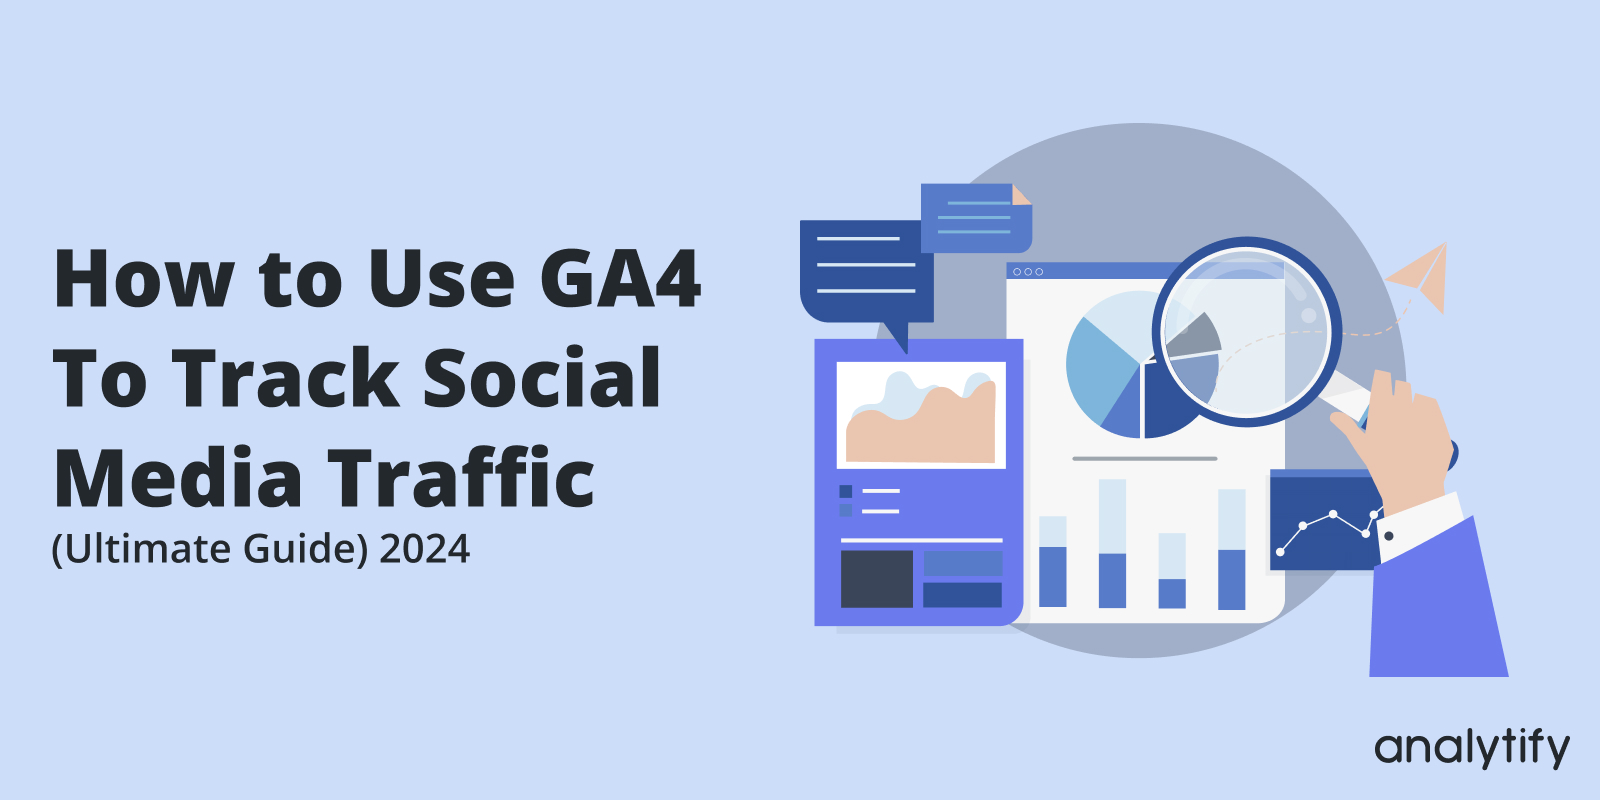 How to Use GA4 To Track GA4 Social Media Traffic